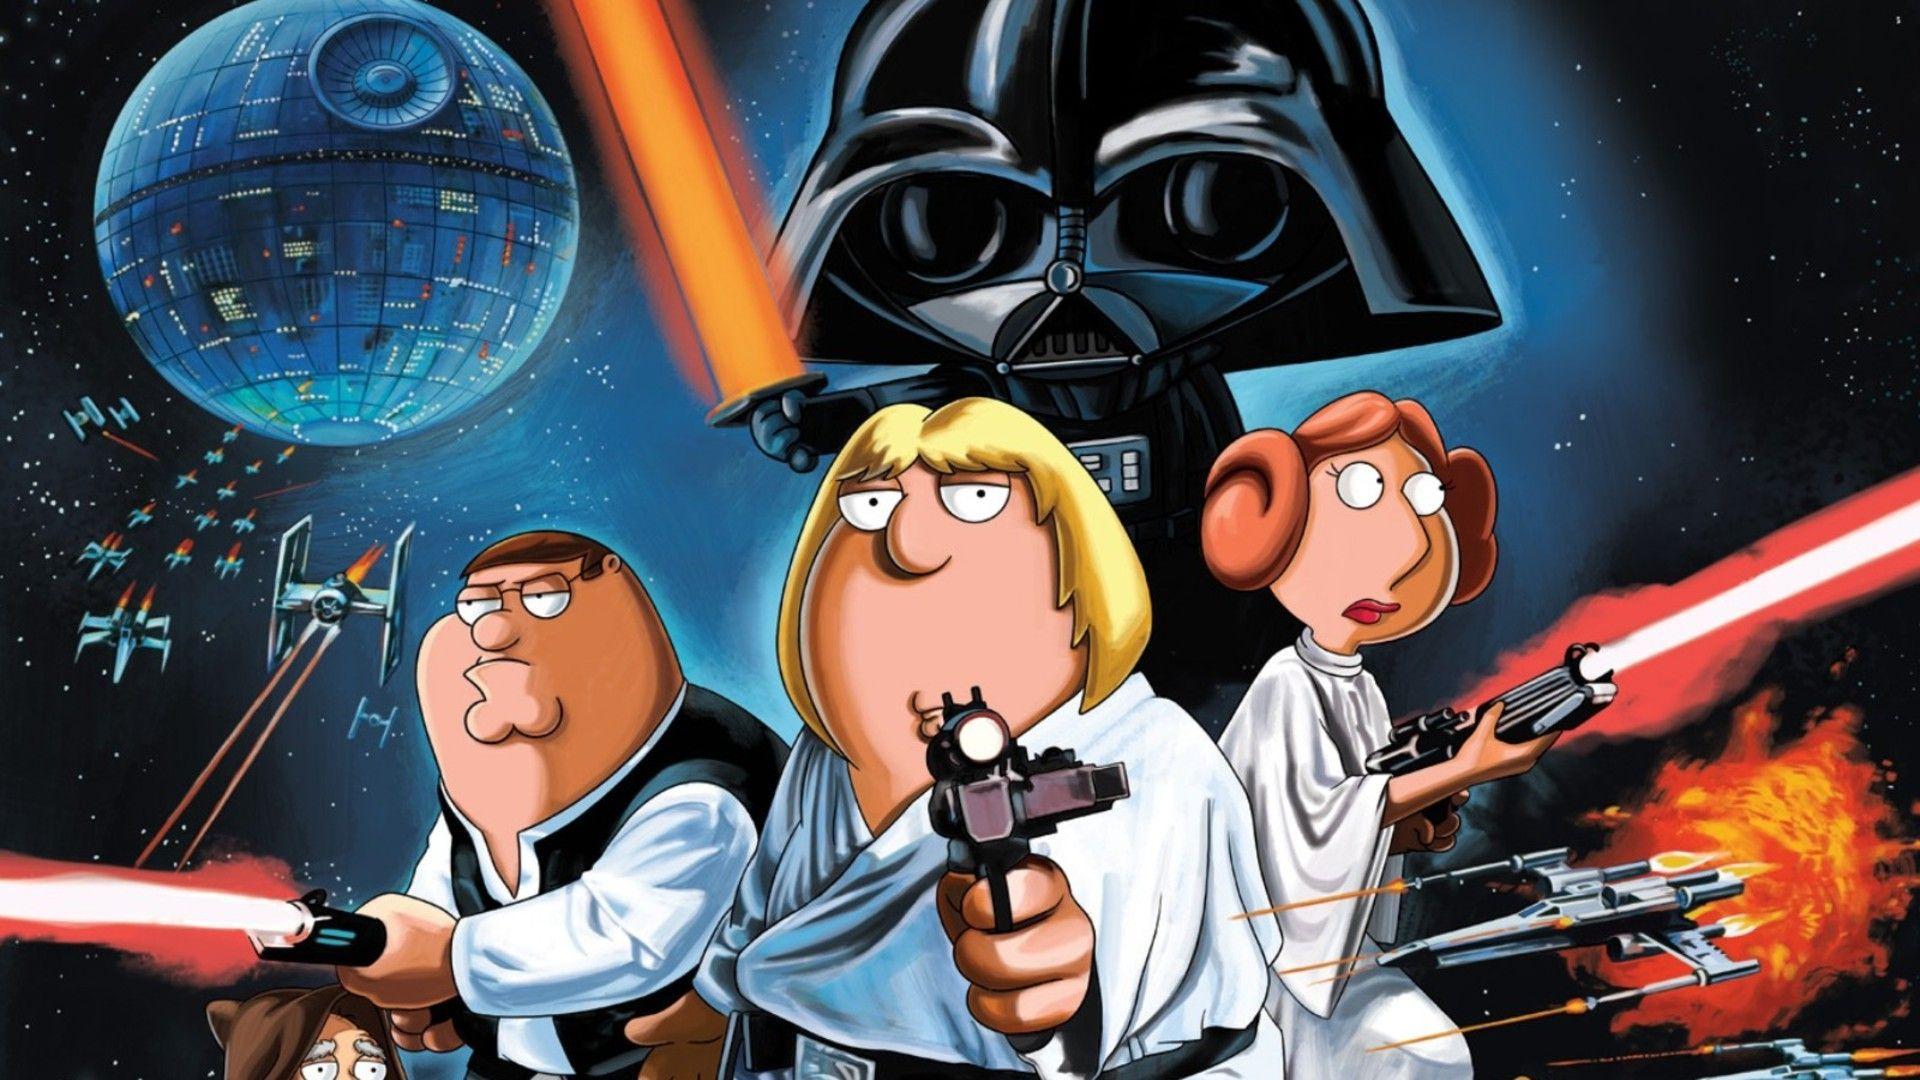 AmazingPict.com. Family Guy Wallpaper Star Wars